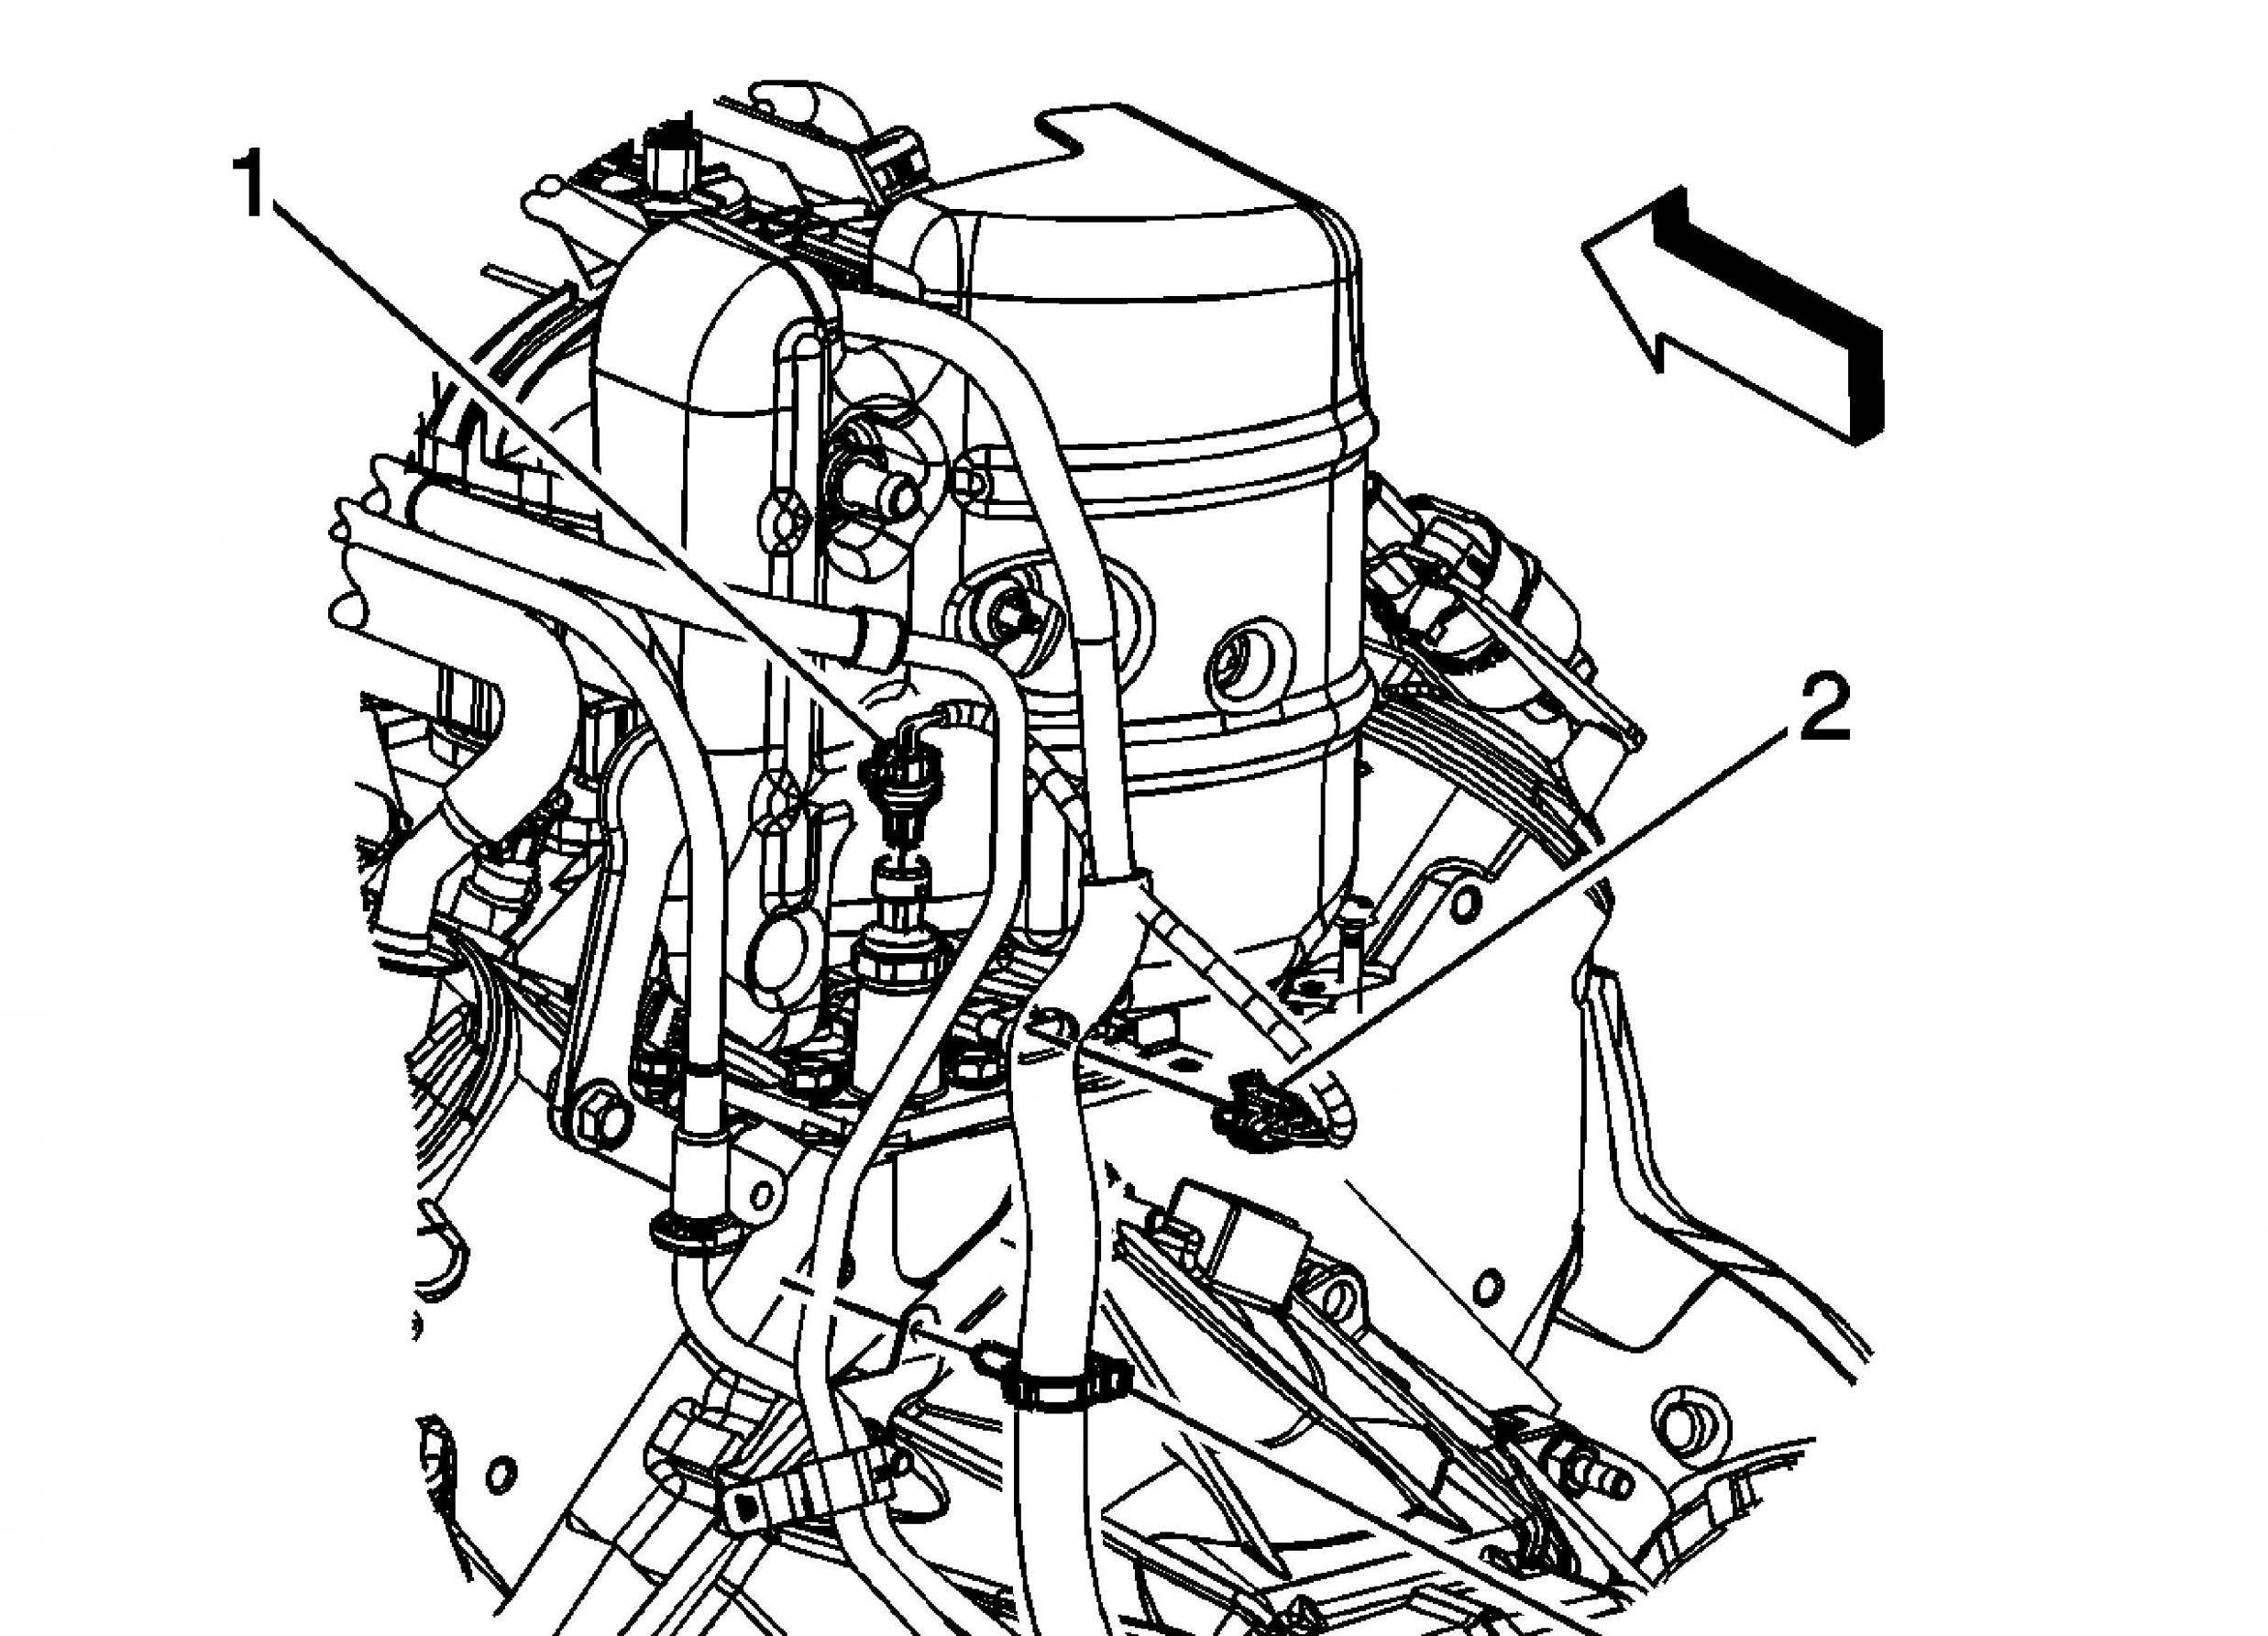 2008 Chevy Impala Fuel Filter Location - Diagrams online